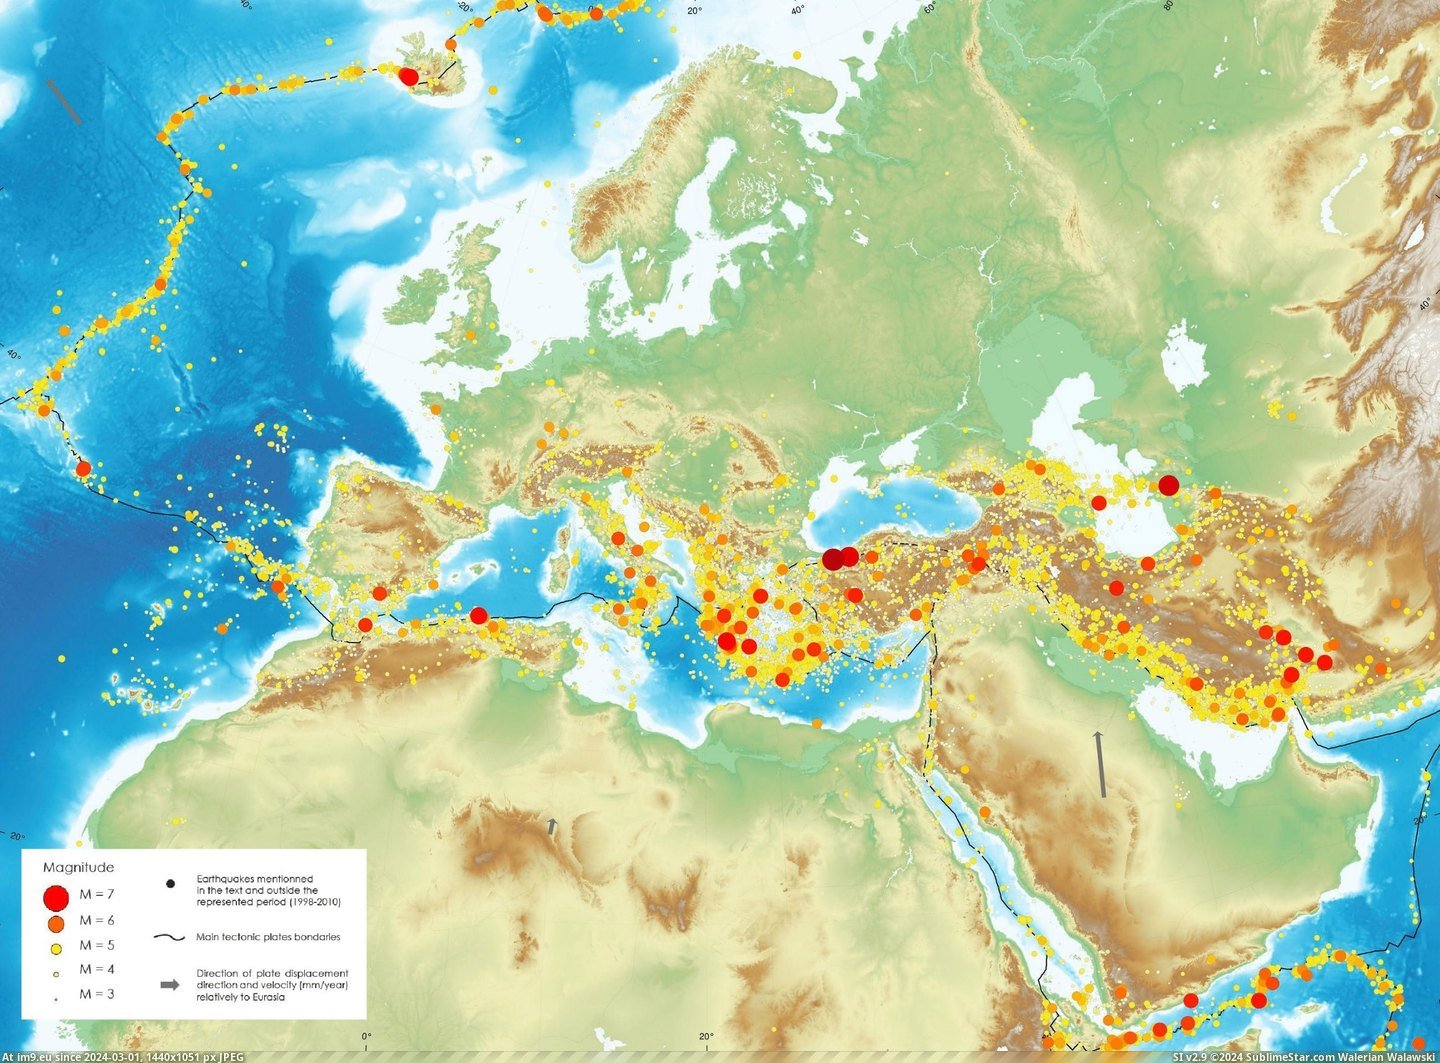 #Map #Europe #Seismic #East #Hazard [Mapporn] Seismic hazard map of Europe and Middle East [2598x1908] Pic. (Bild von album My r/MAPS favs))